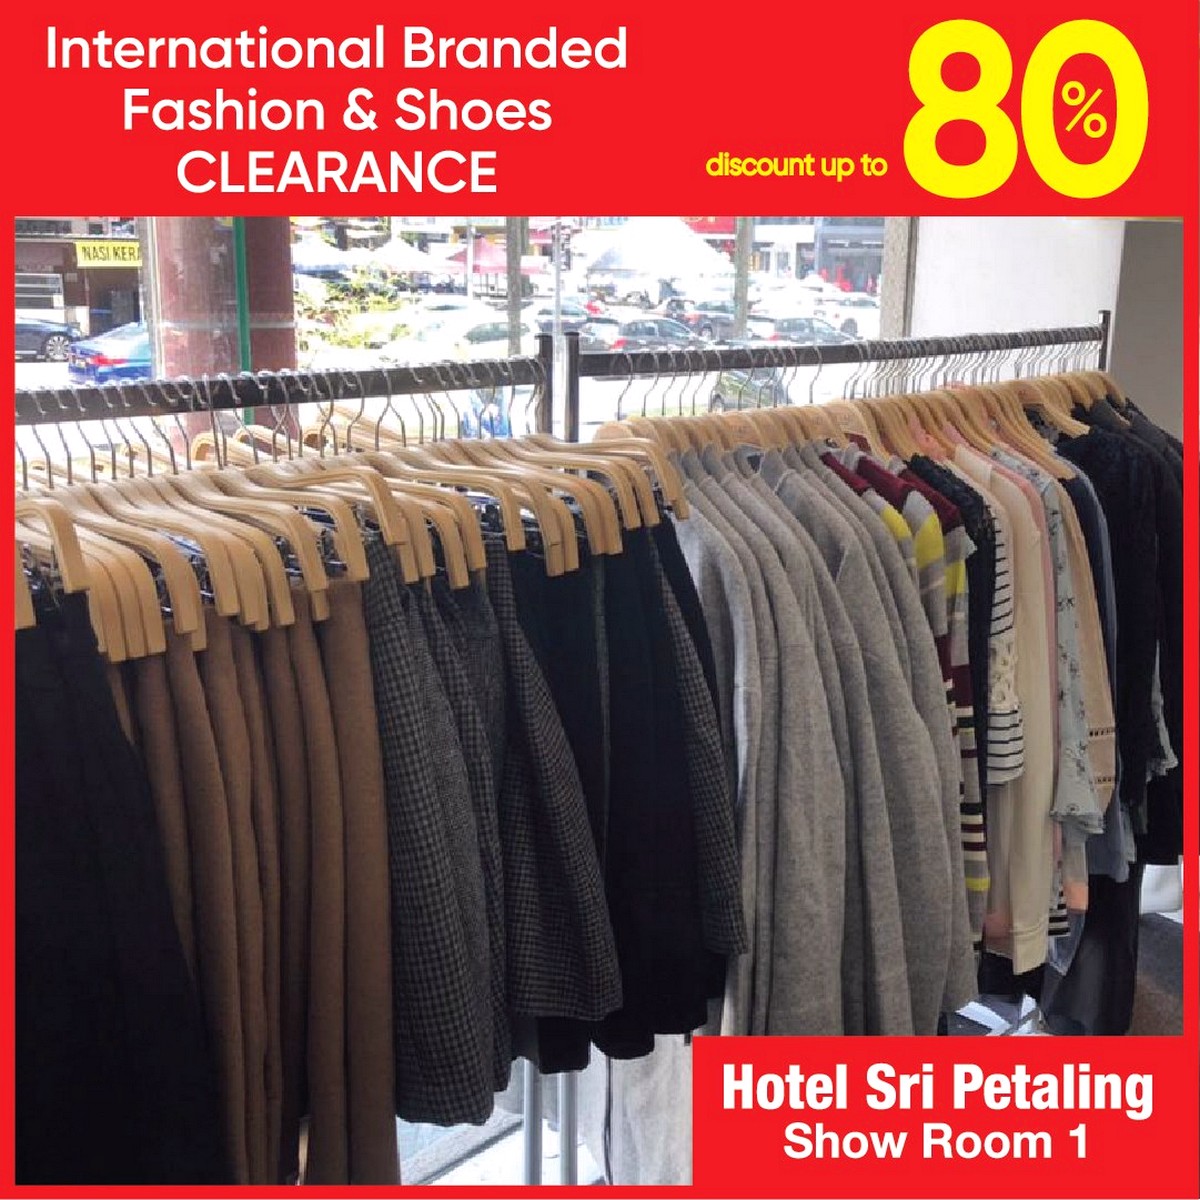 Hotel-Sri-Petaling-Warehouse-Sale-2021-2 - Apparels Fashion Accessories Fashion Lifestyle & Department Store Kuala Lumpur Selangor Warehouse Sale & Clearance in Malaysia 